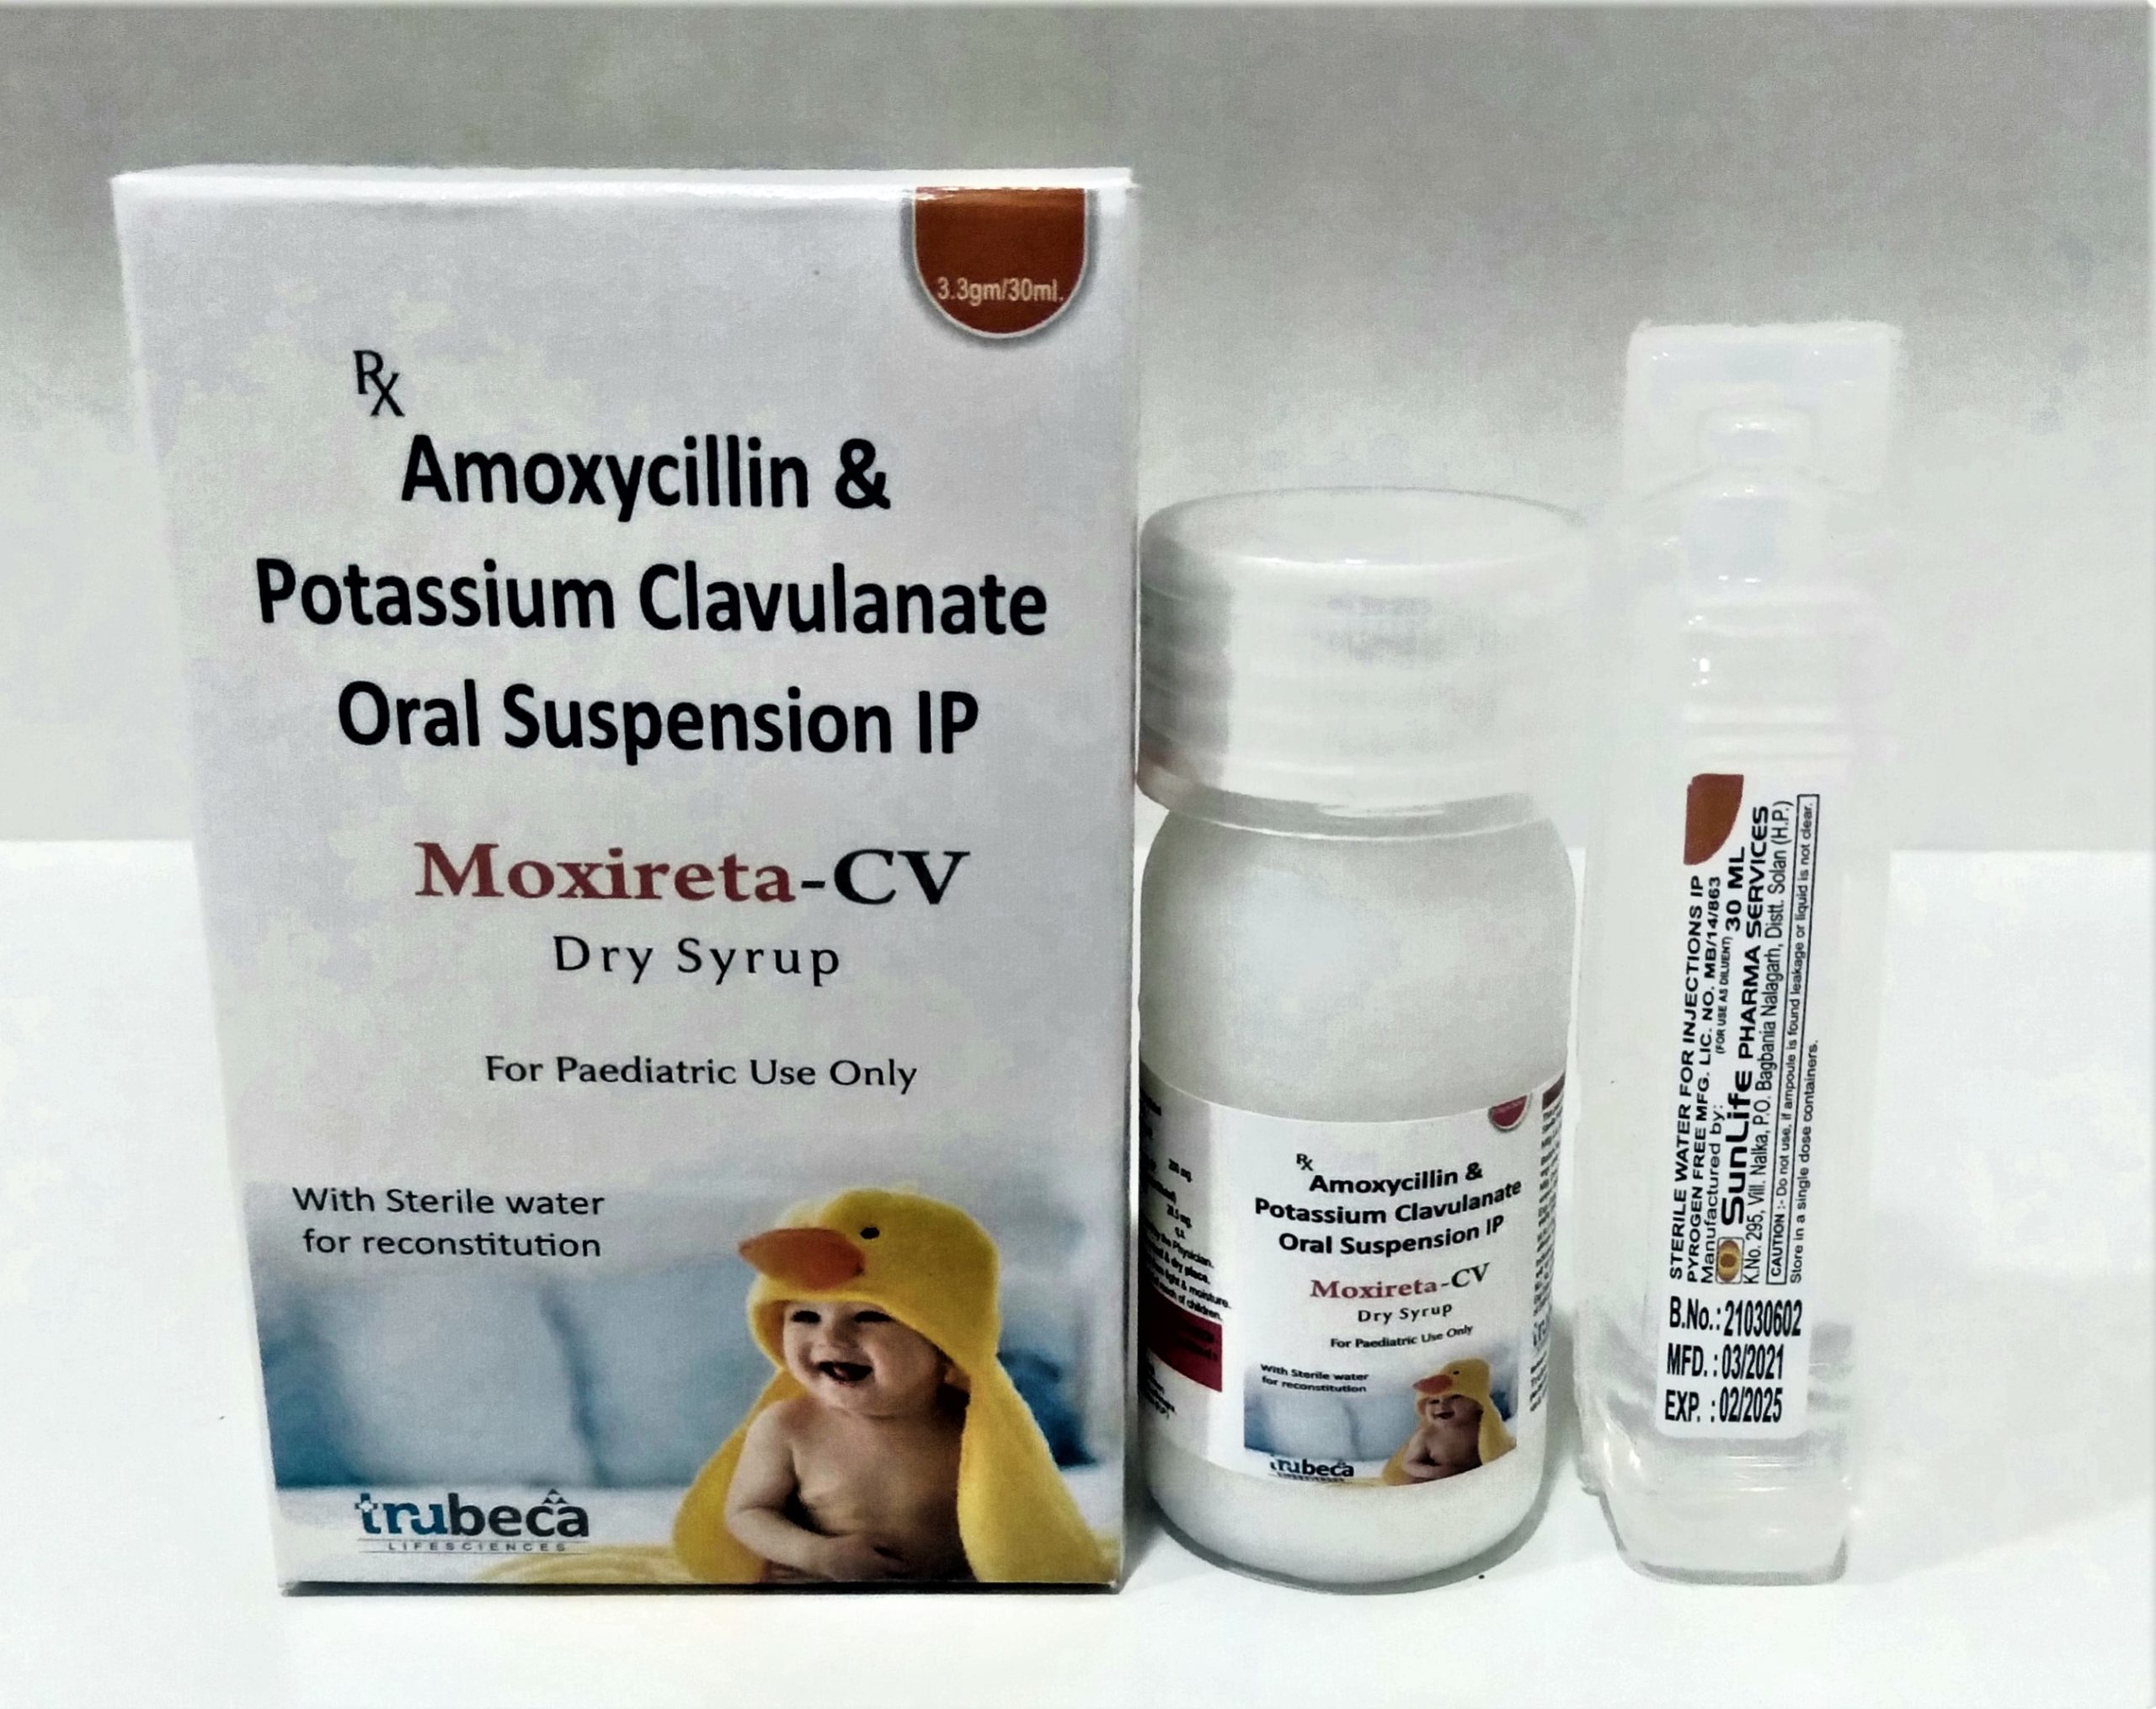 amoxycillin 200mg + potassium clavulanate 28.5mg dry syrup with water & monocarton